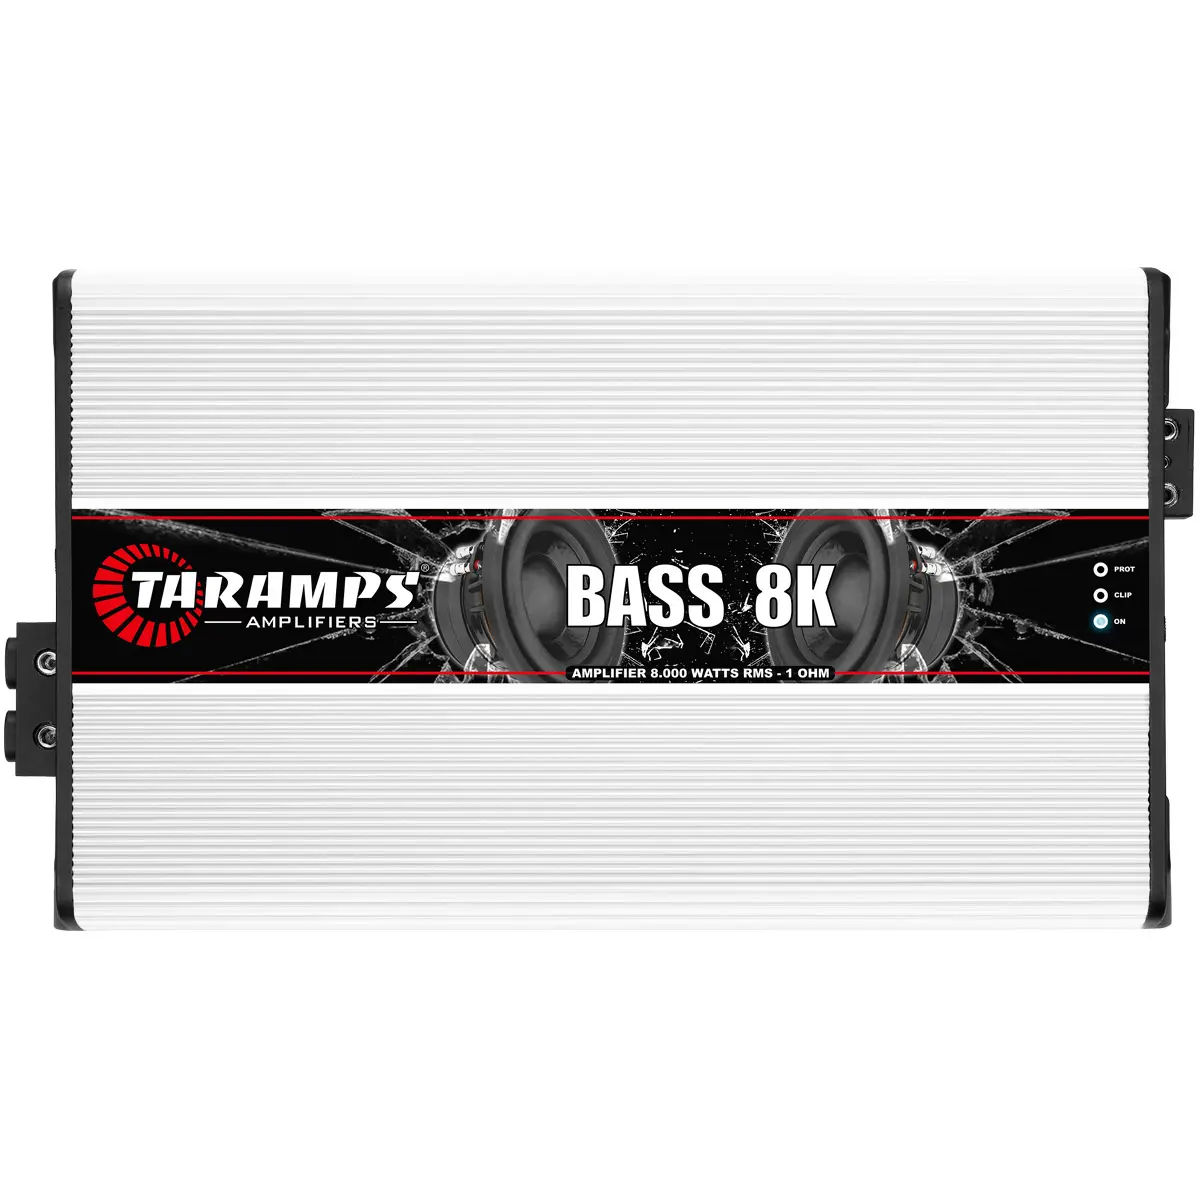 Taramps Bass 8k 8000 watts Rms Amplificador de Áudio Do Carro 1 ohm Mono amp Classe D 1 Canal Monobloco Alto Desempenho, RCA, Potência